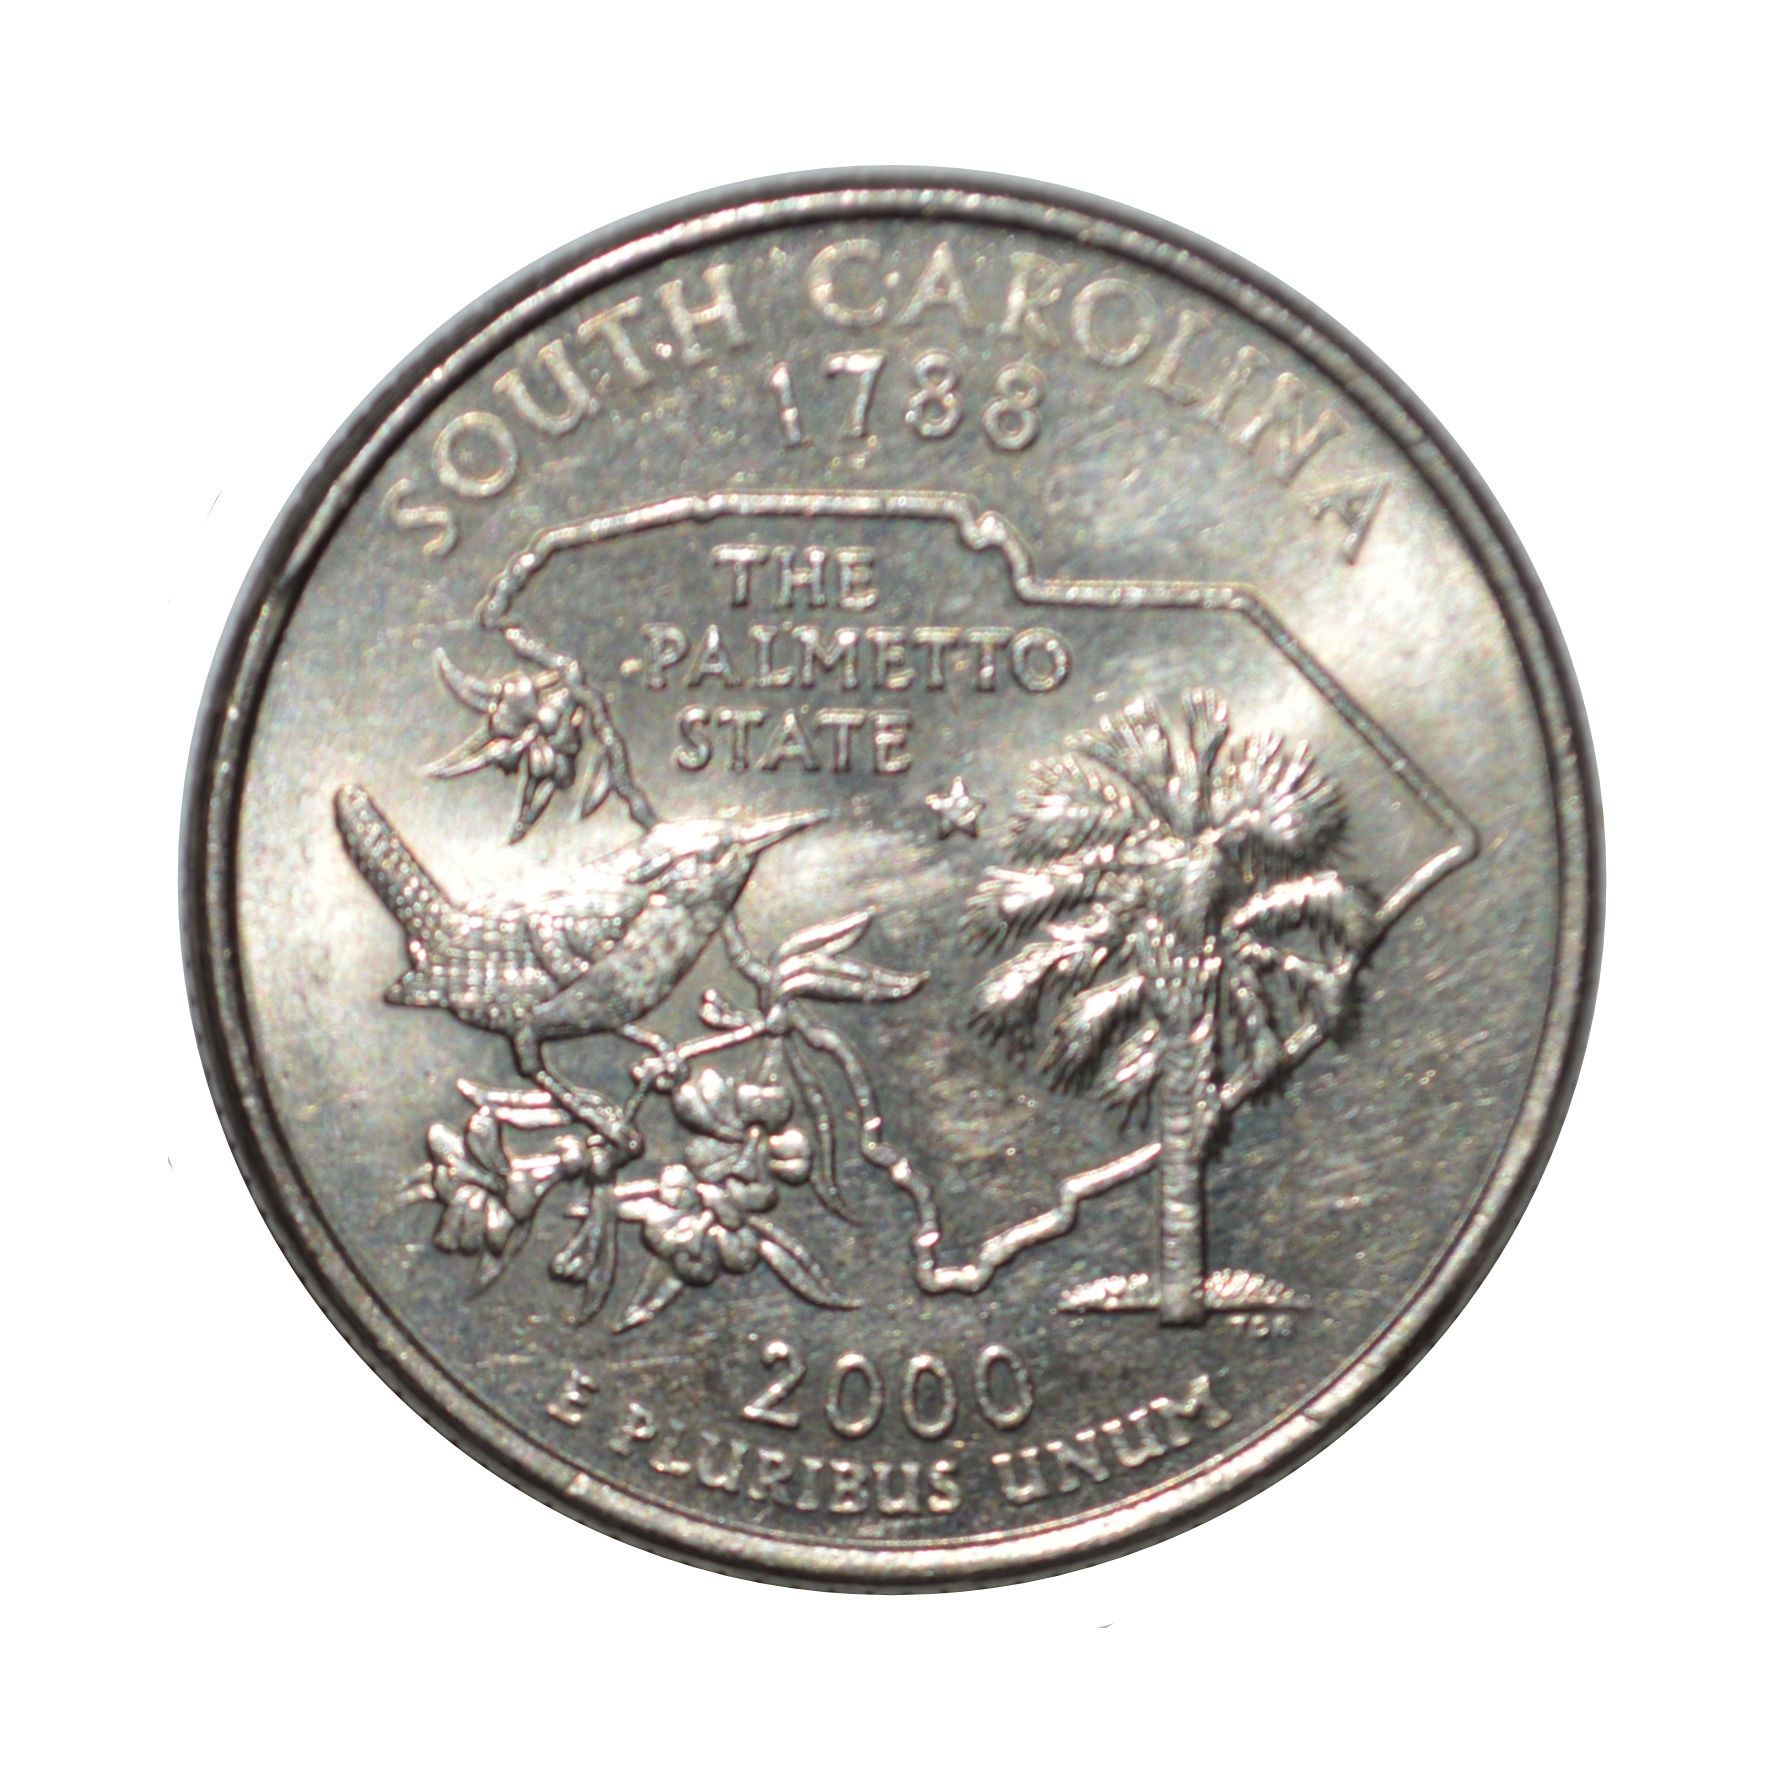 سکه تزیینی طرح 25 سنت یادبودی کشور کانادا مدل 2000 میلادی